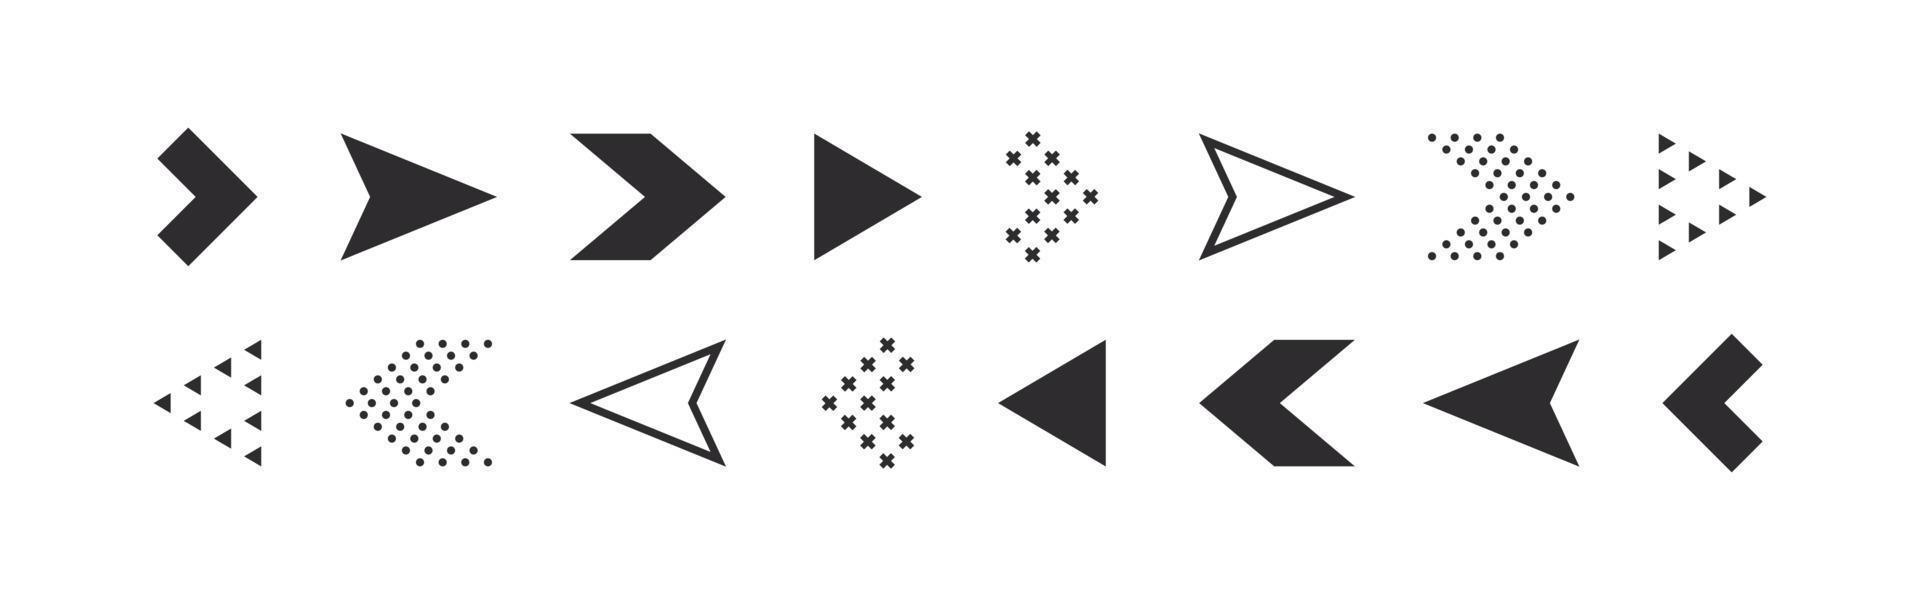 Arrows set. Modern arrow icons. Cursor or arrow signs. Vector illustration